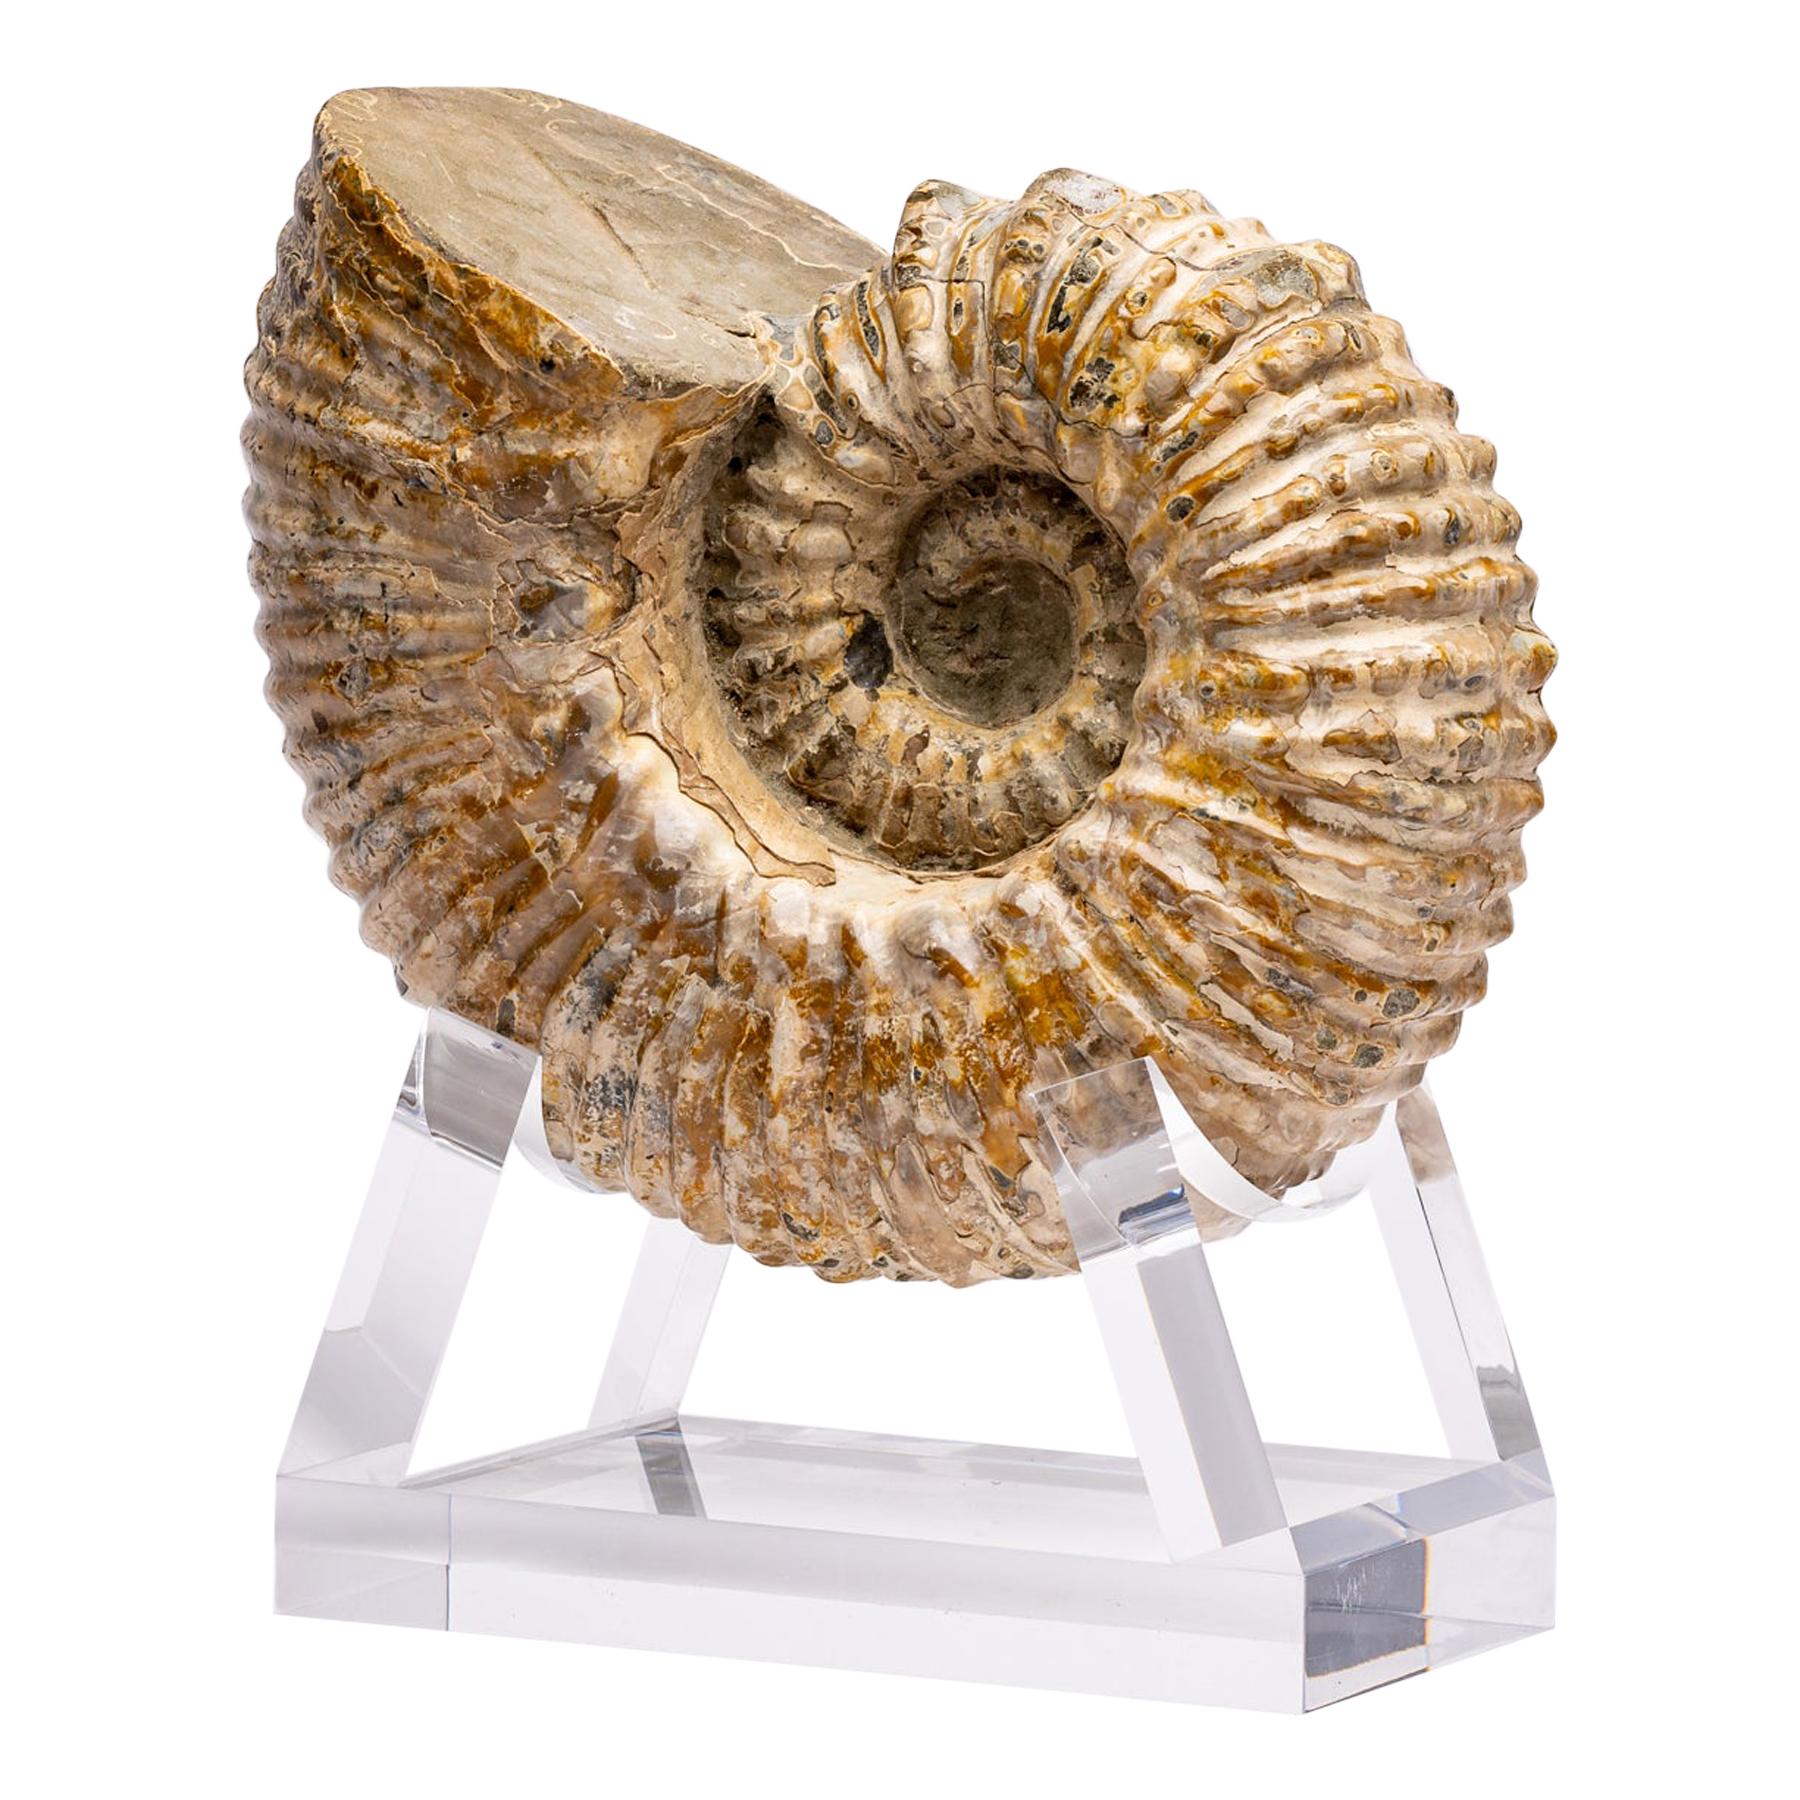 Madagascar Douvilleiceras Ammonite Fossil on Acrylic Base, Cretaceous Period